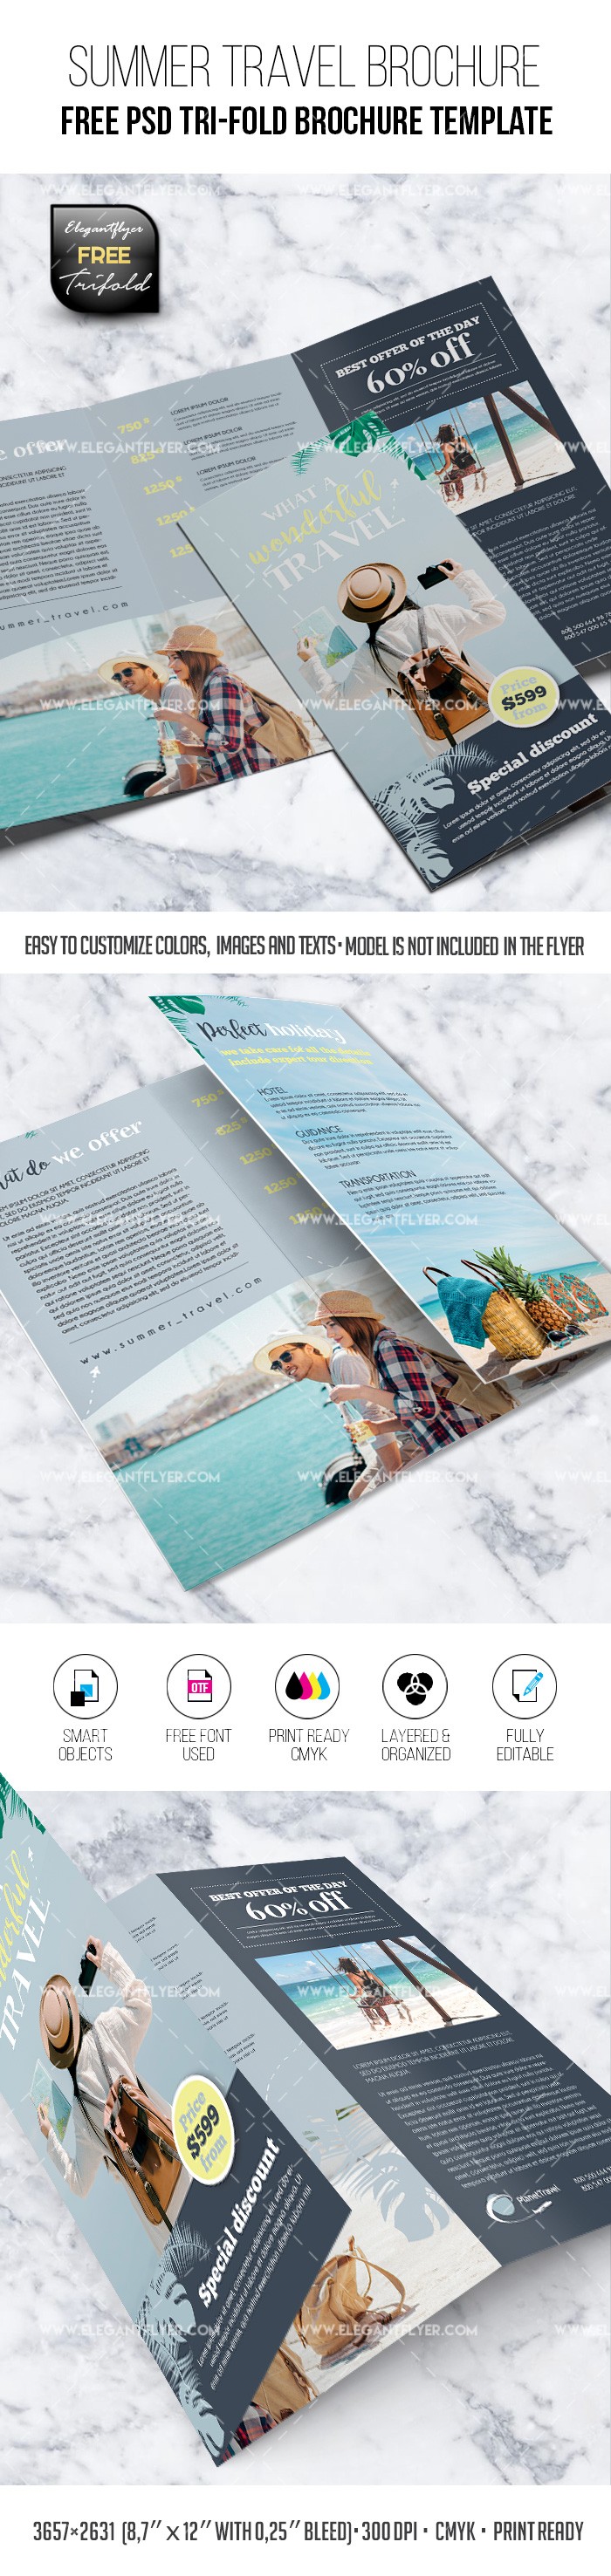 Summer Travel – Free PSD Tri-Fold Brochure Template by ElegantFlyer